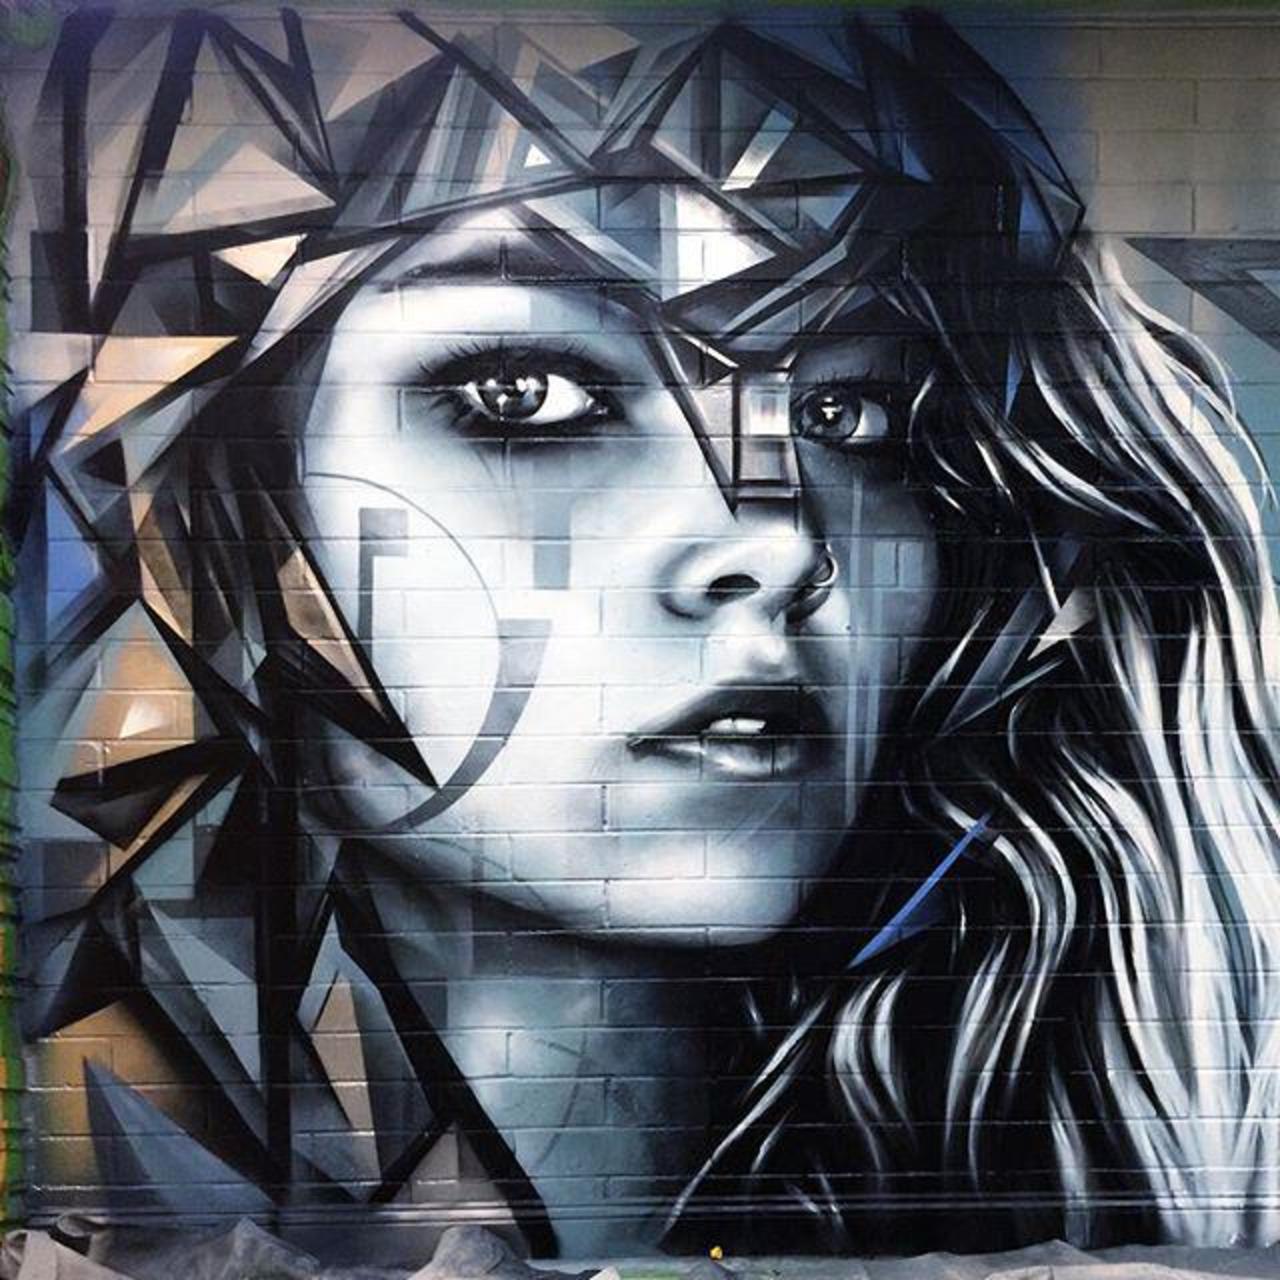 RT @cakozlem76: Christina Angelina & easeonetx #art #streetart #urbanart #graffiti http://t.co/R7BOvoEpWQ